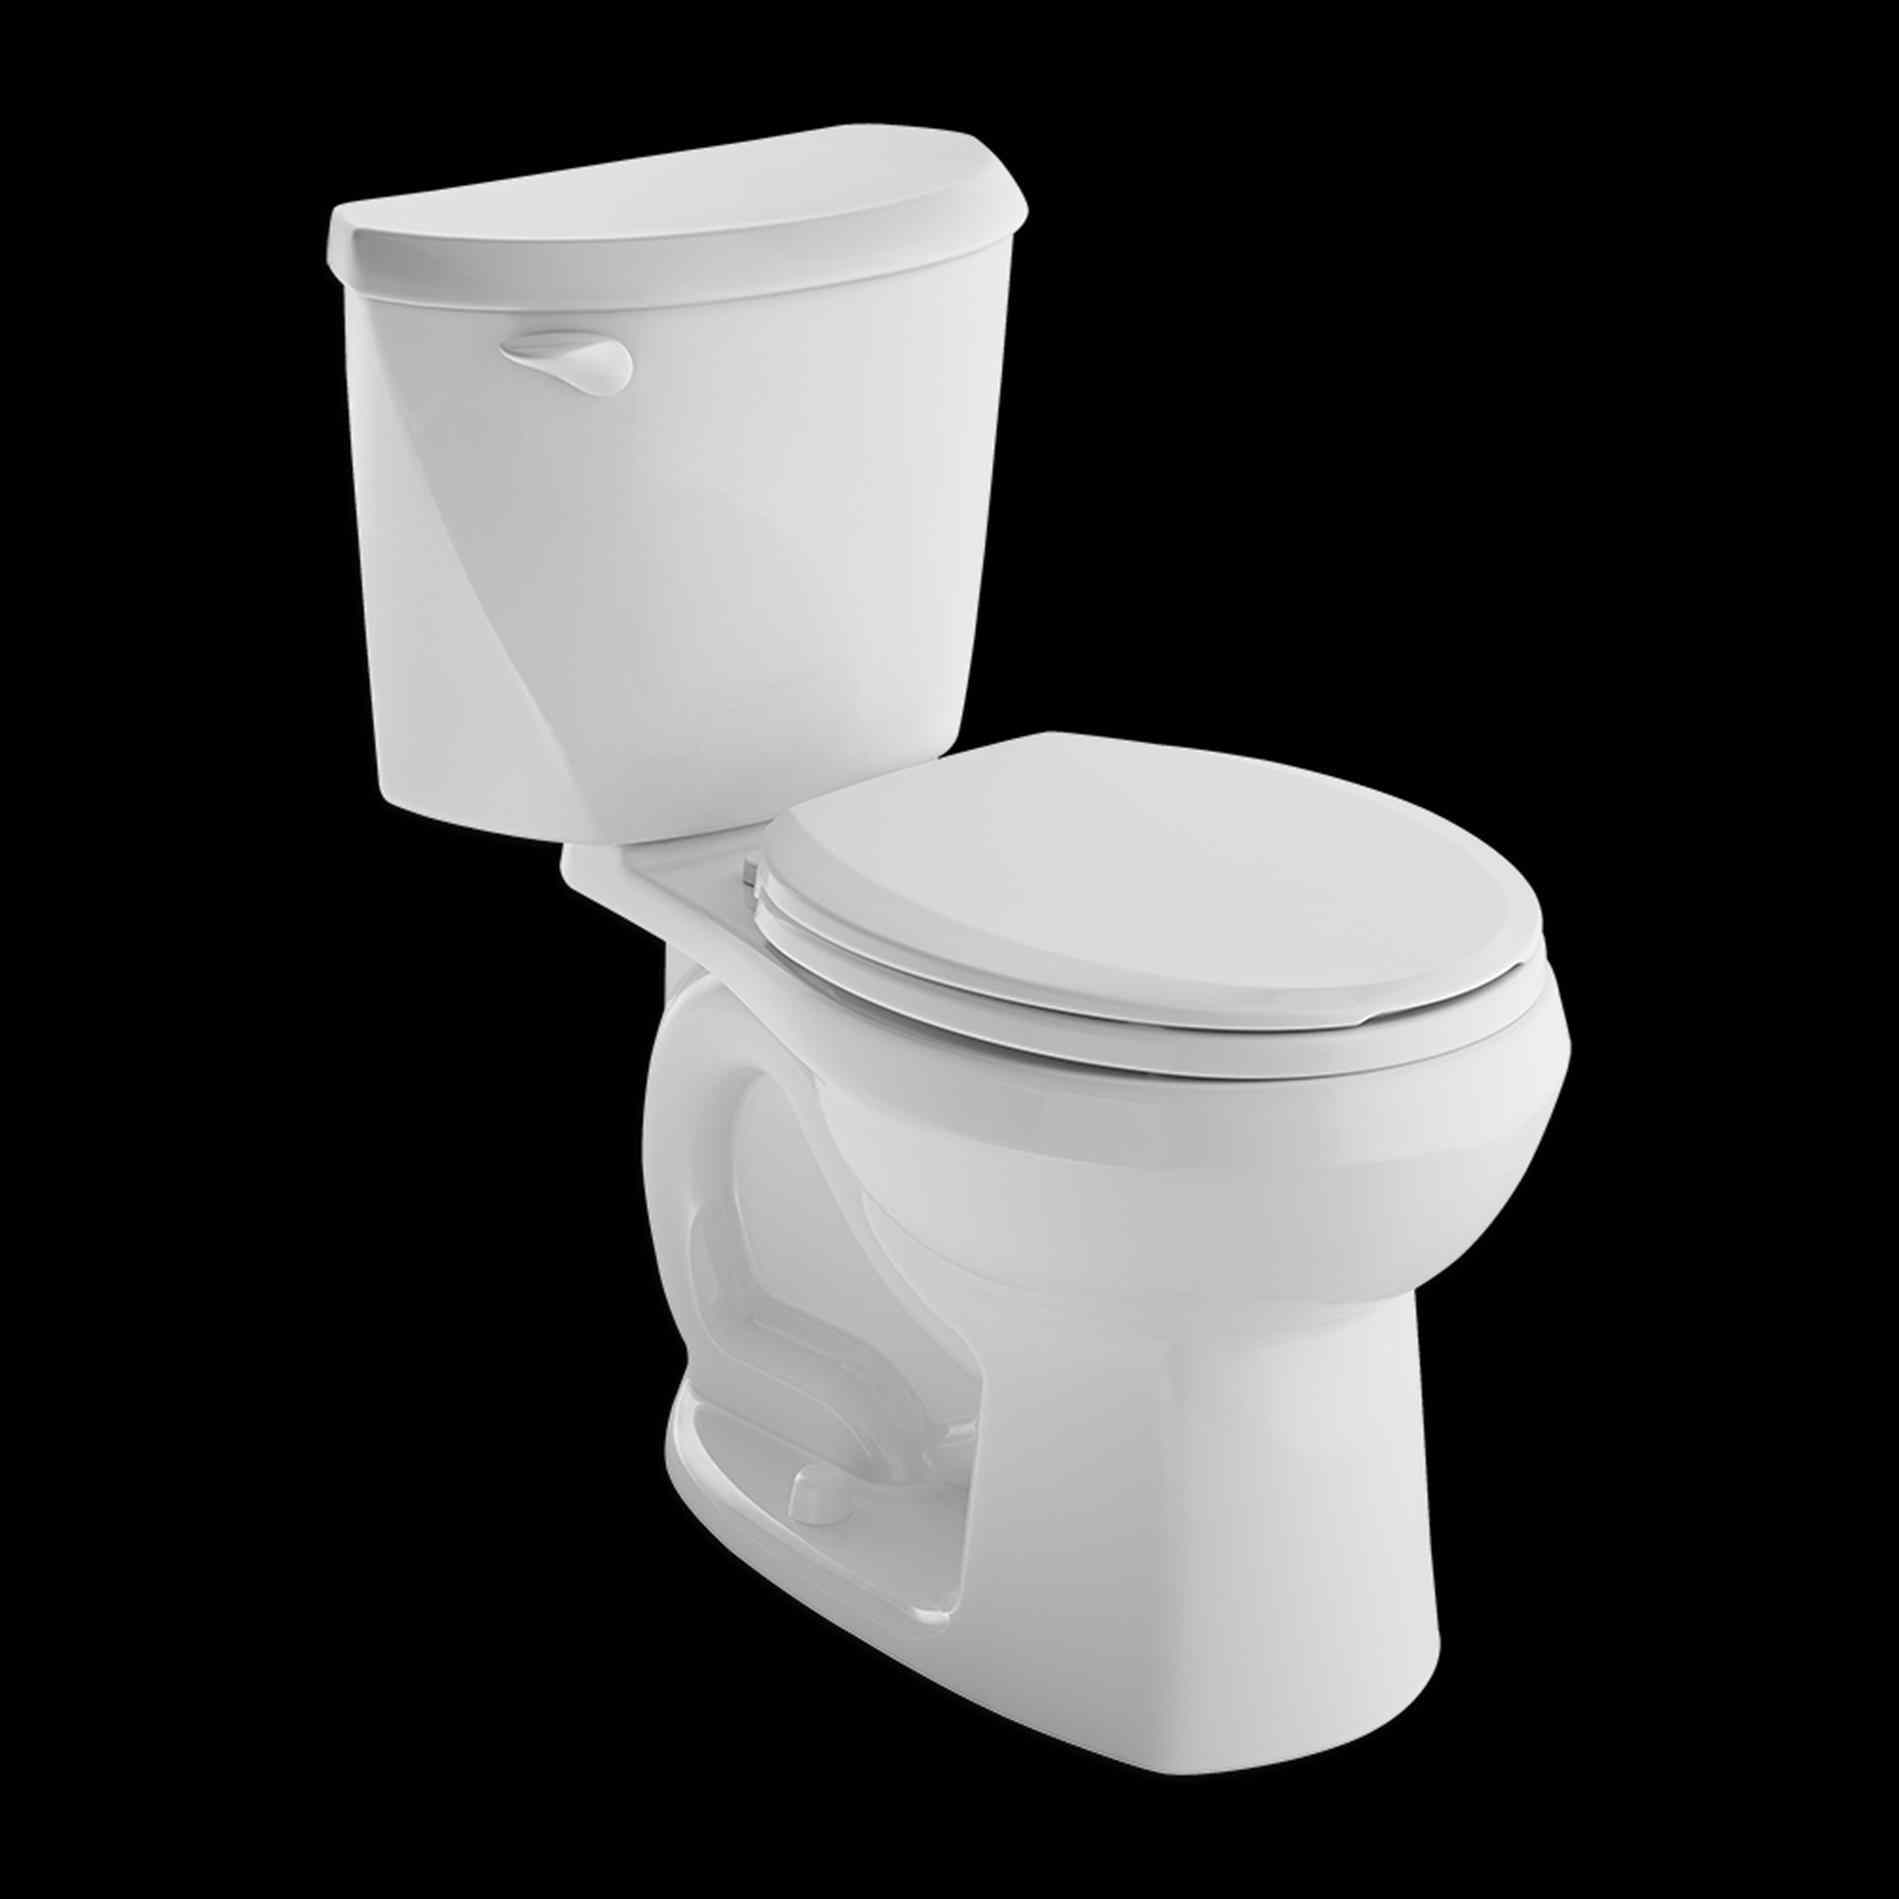 Toilet PNG HD - 142375